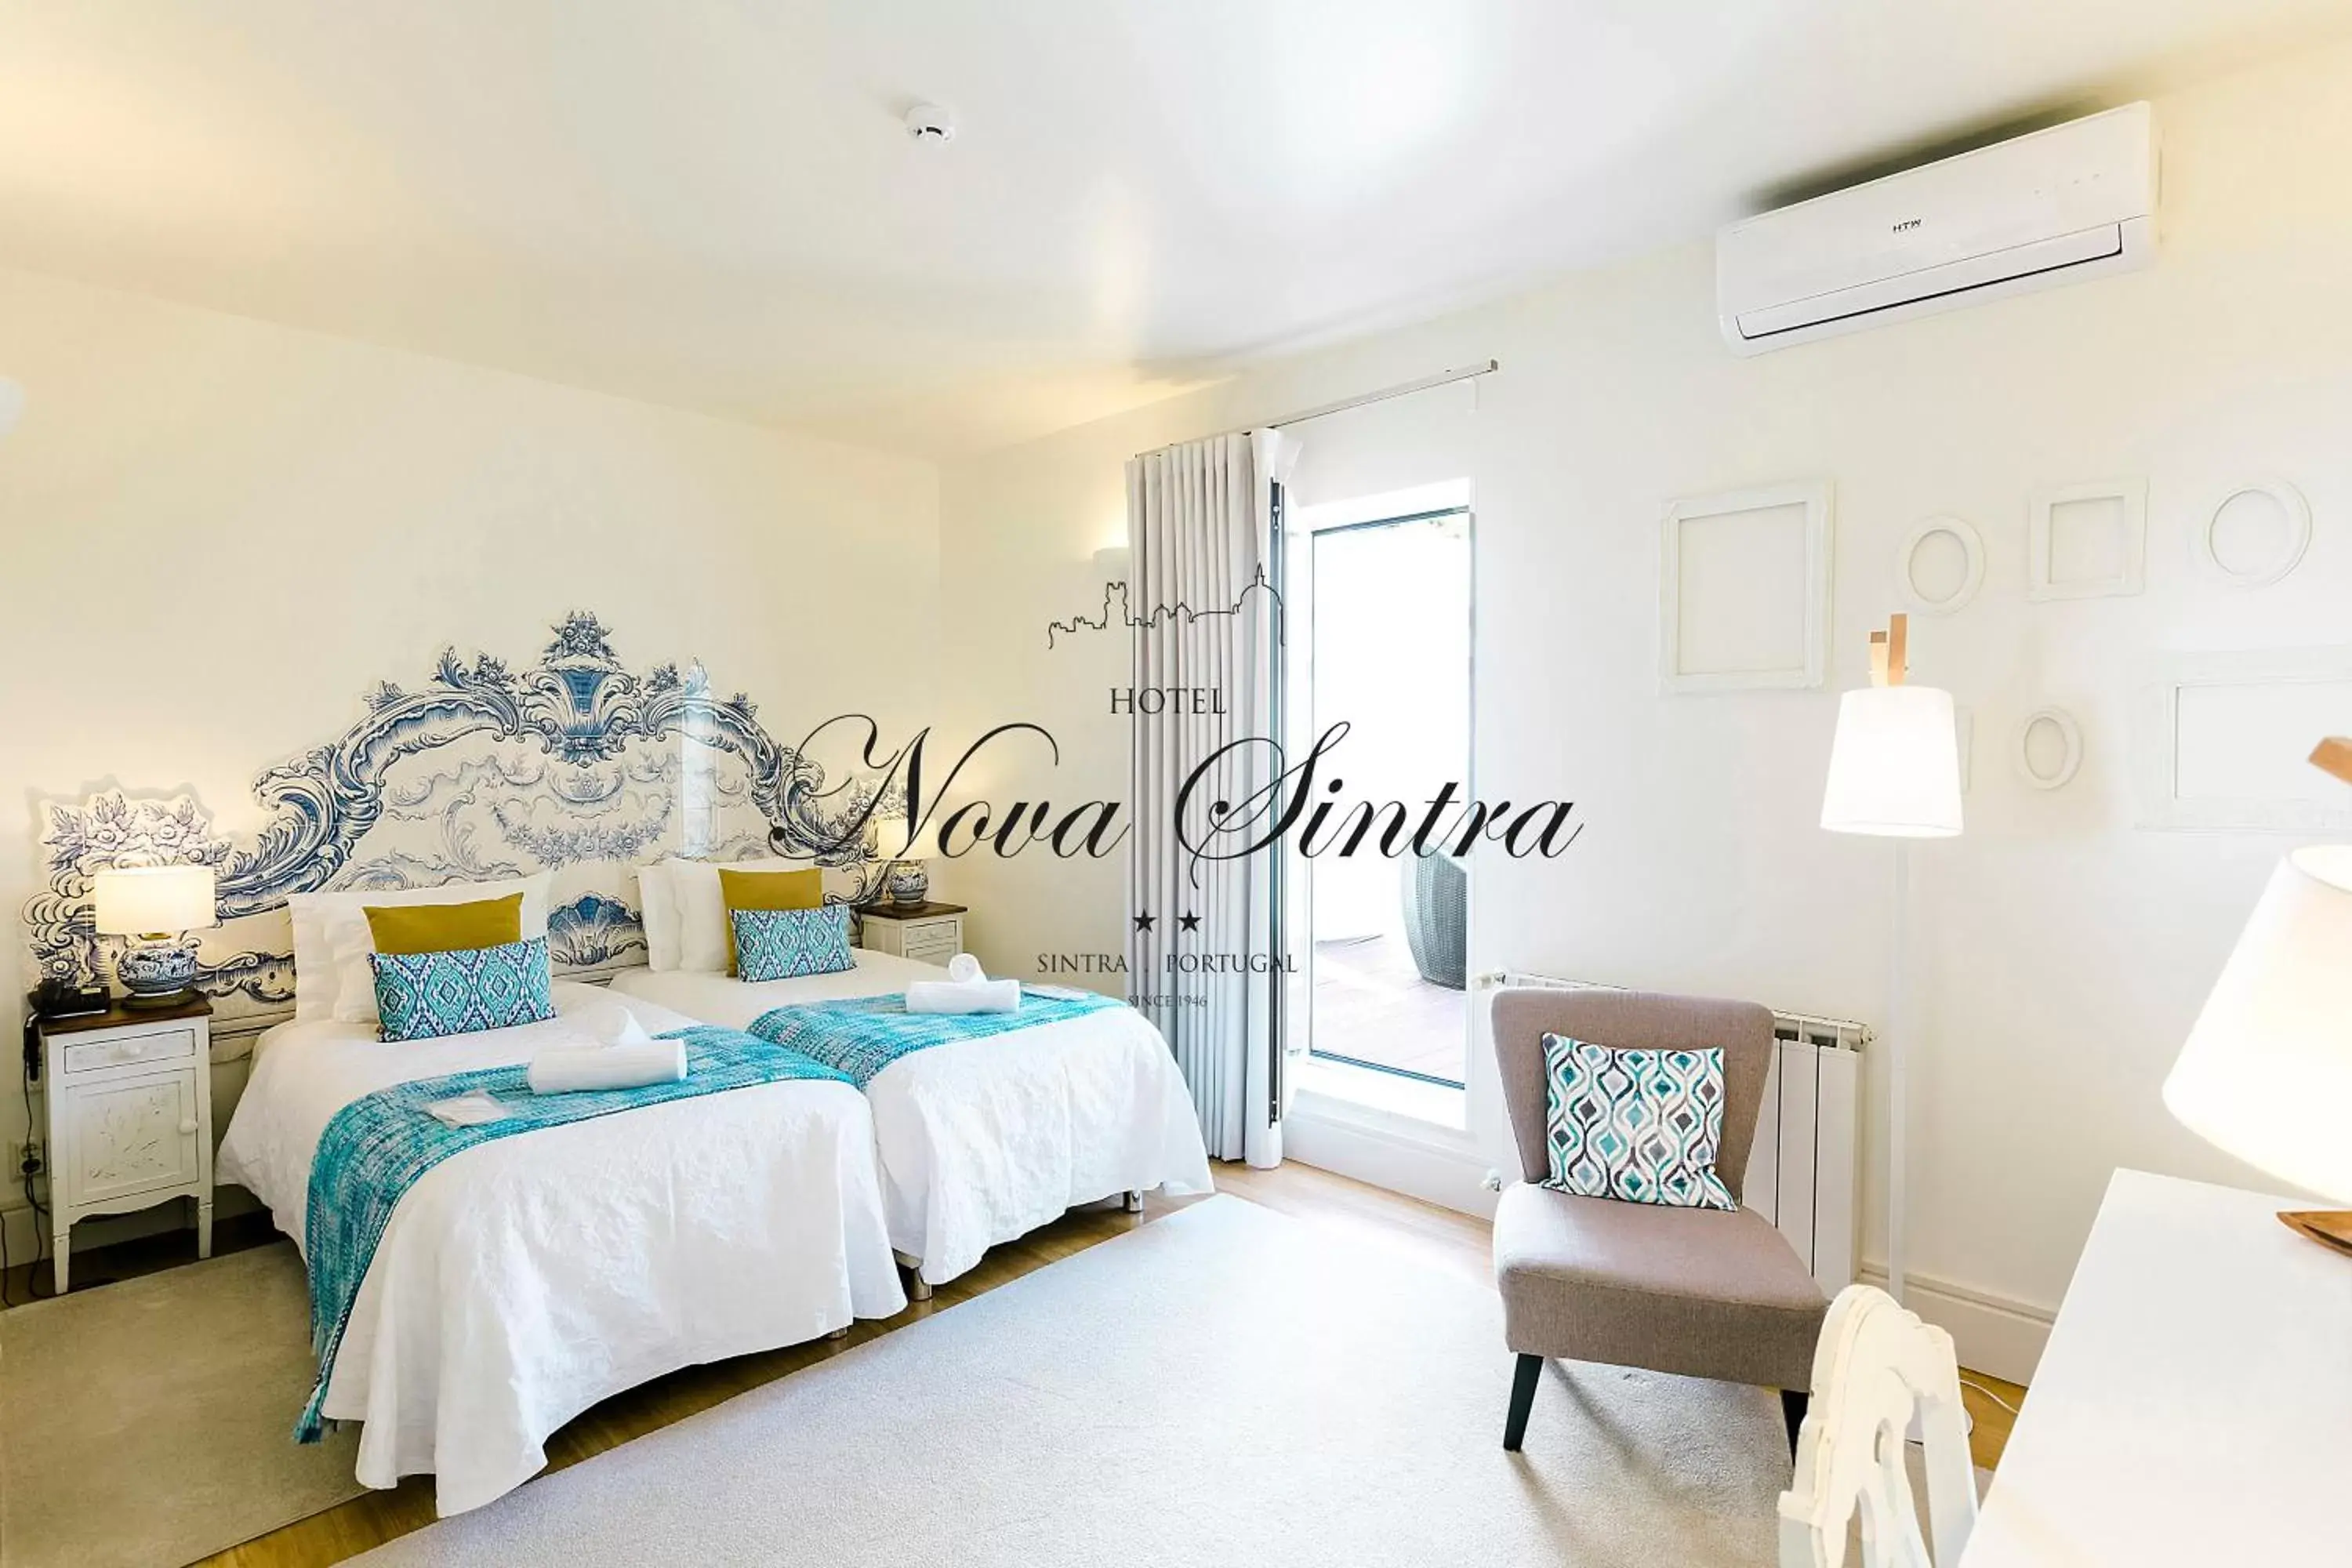 Twin Room with Terrace in Hotel Nova Sintra